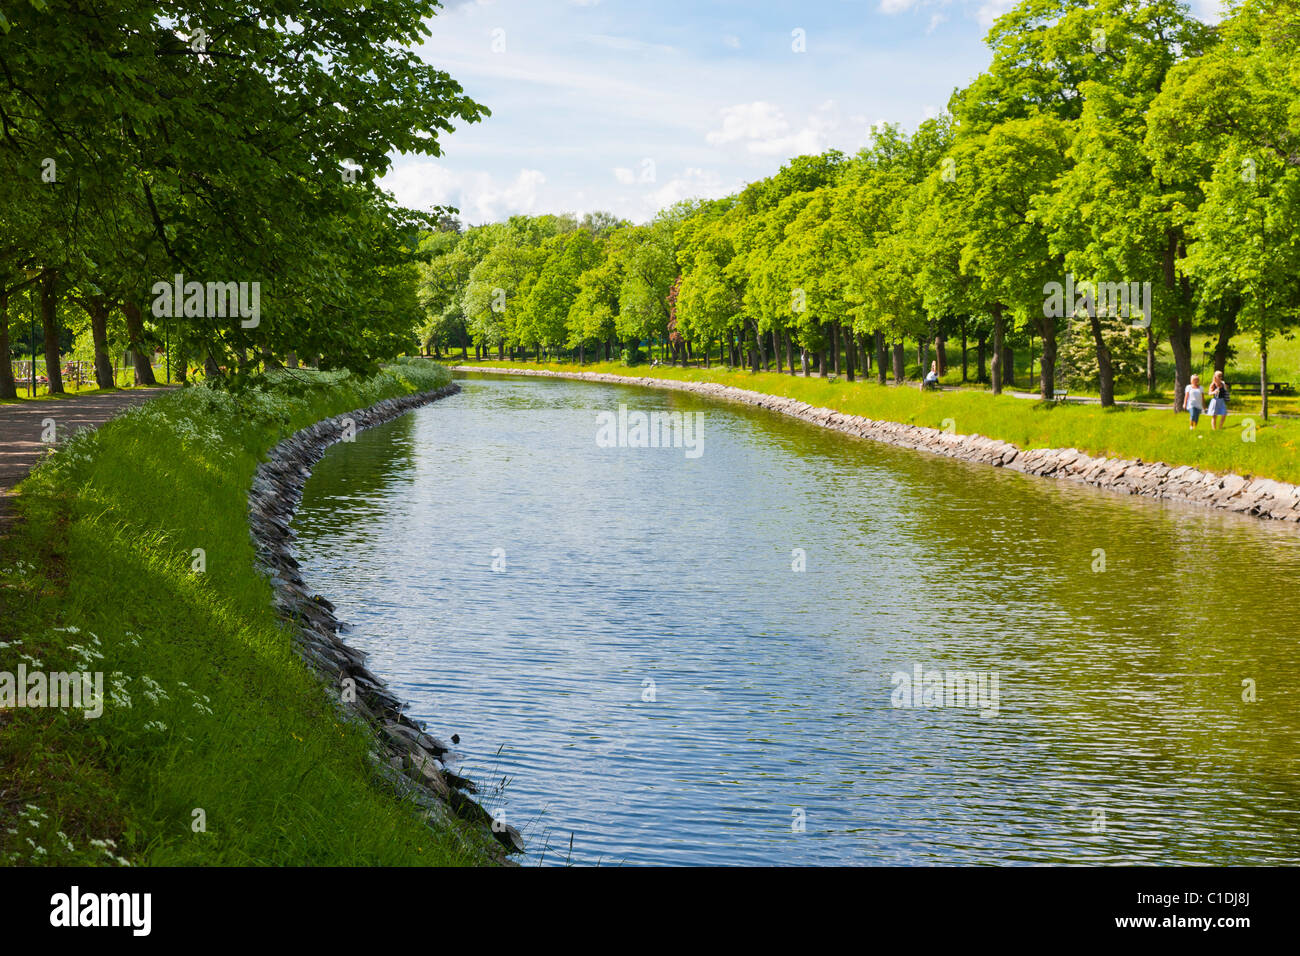 The canal through Djurgarden, Stockholm, Sweden. Stock Photo